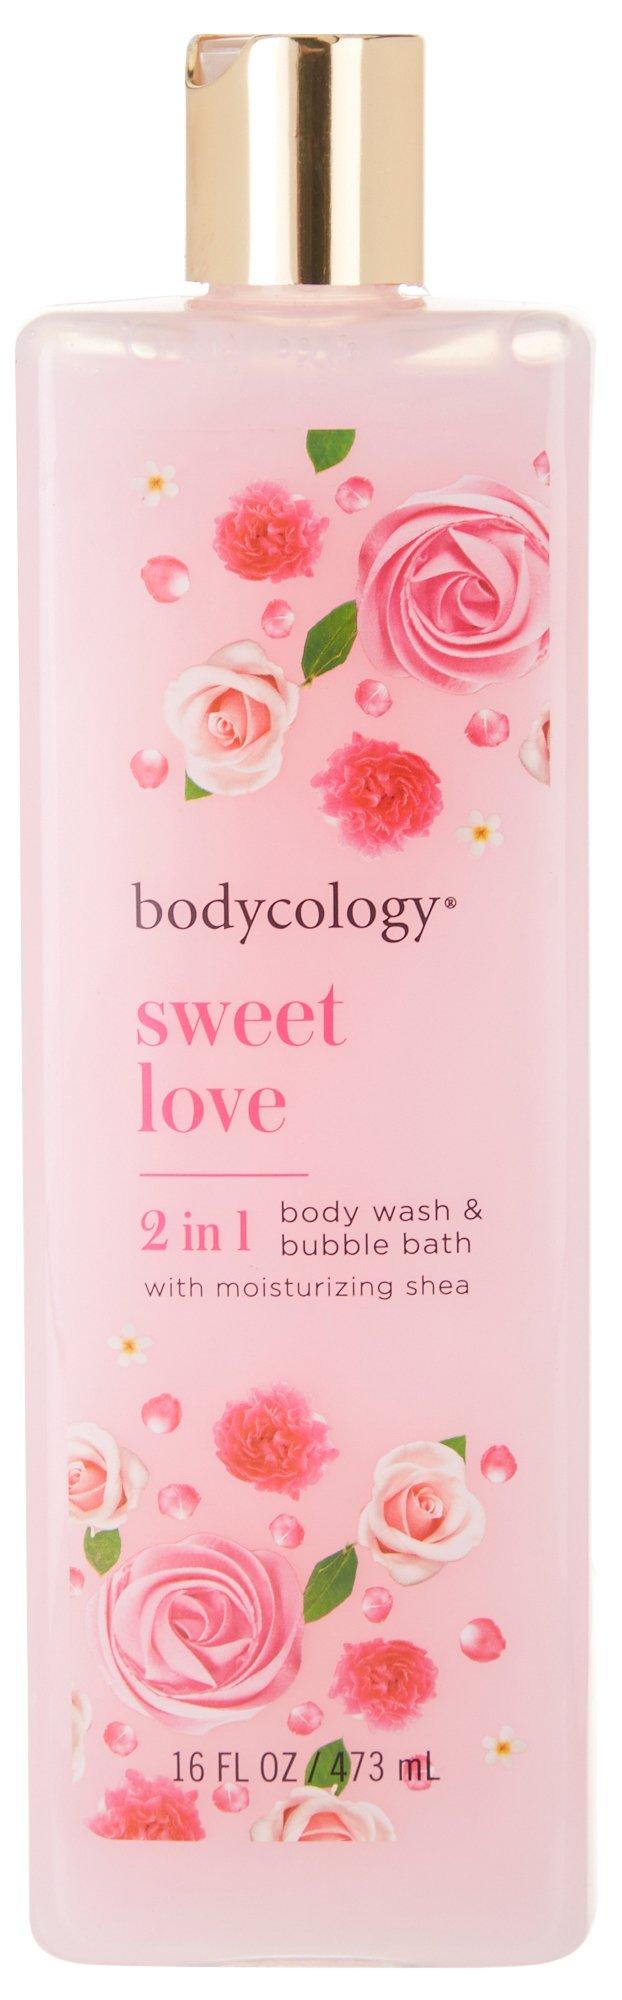 Bodycology Sweet Love Body Wash & Bubble Bath